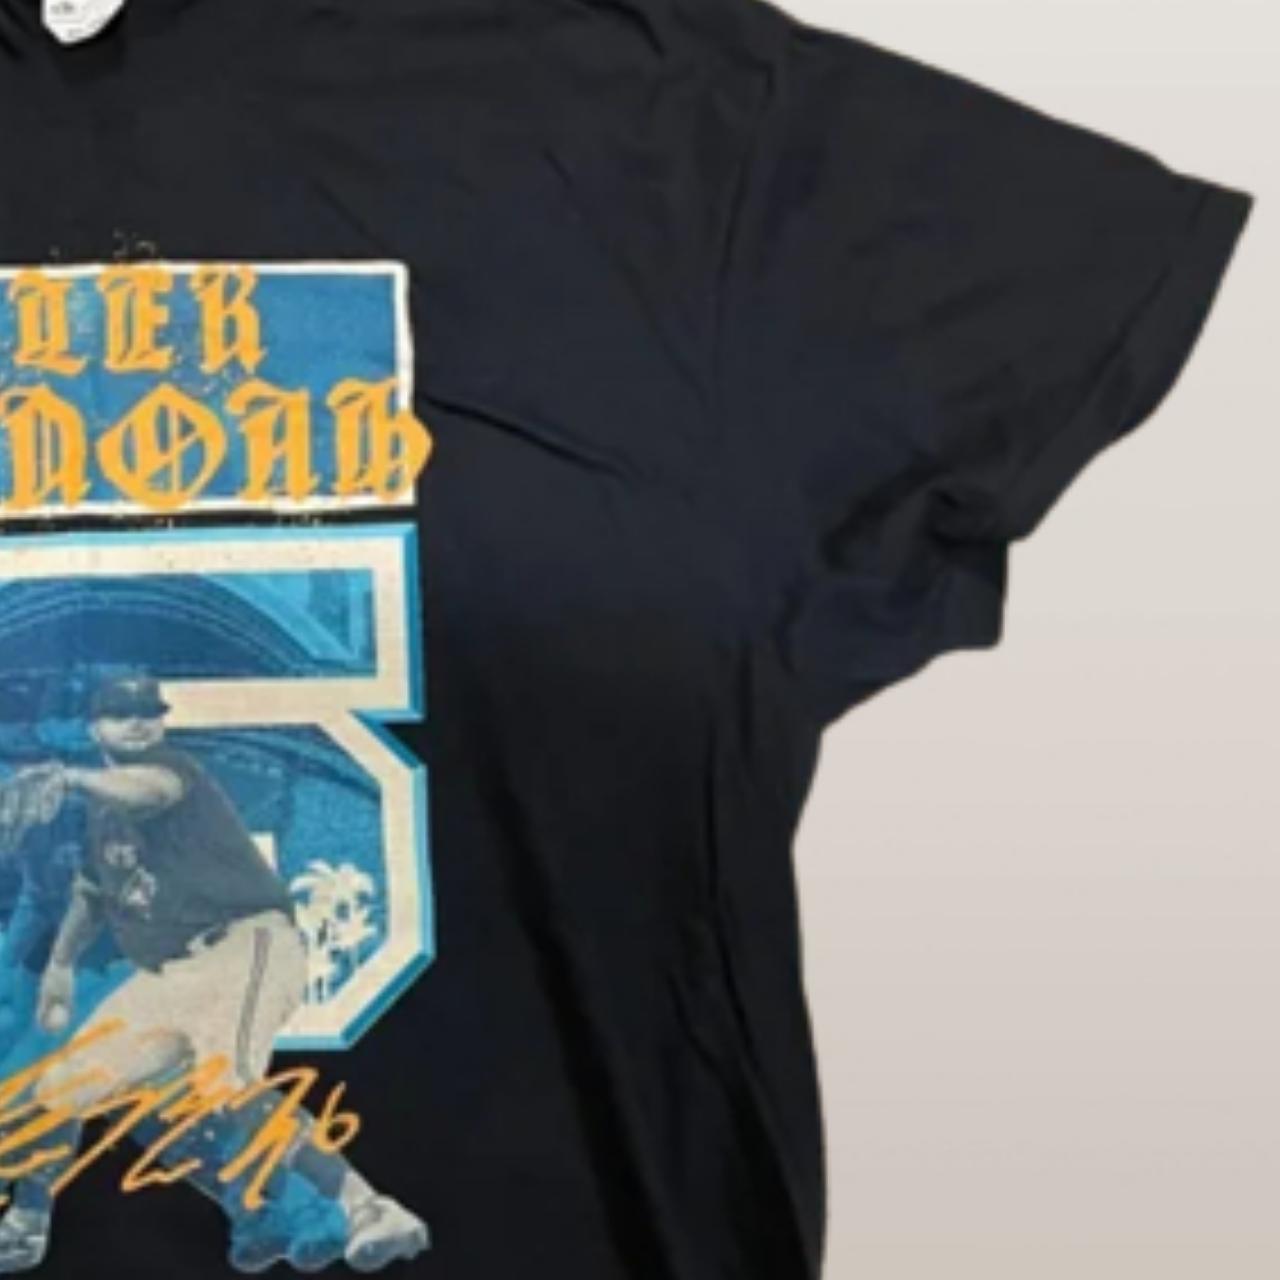 Alek Manoah Toronto Blue Jays Promo T-Shirt Due to - Depop